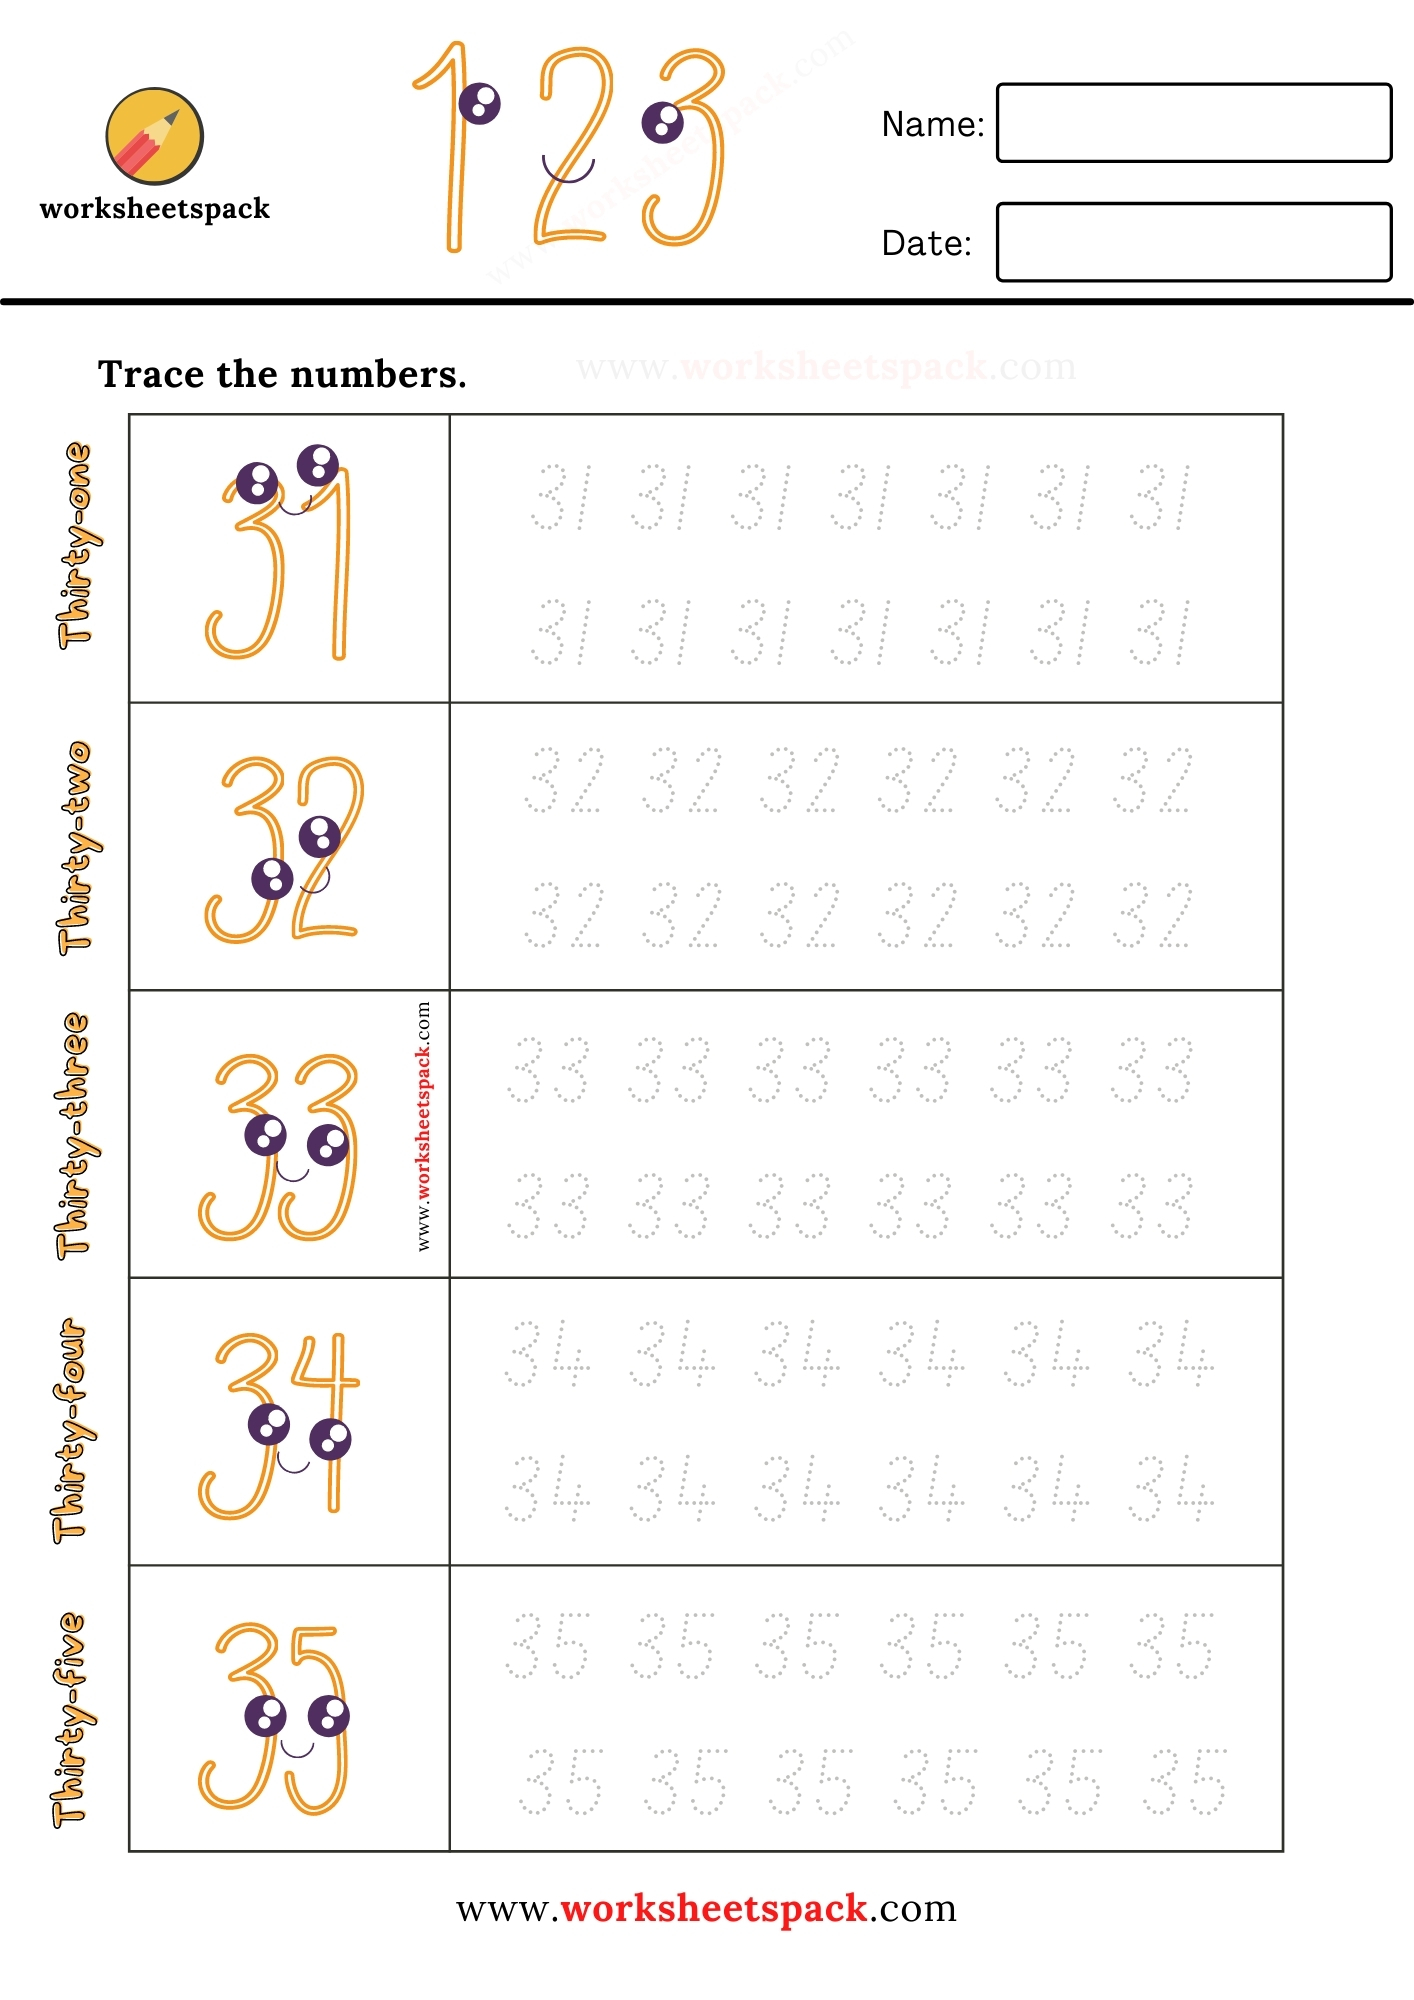 number-tracing-worksheets-1-50-worksheetspack